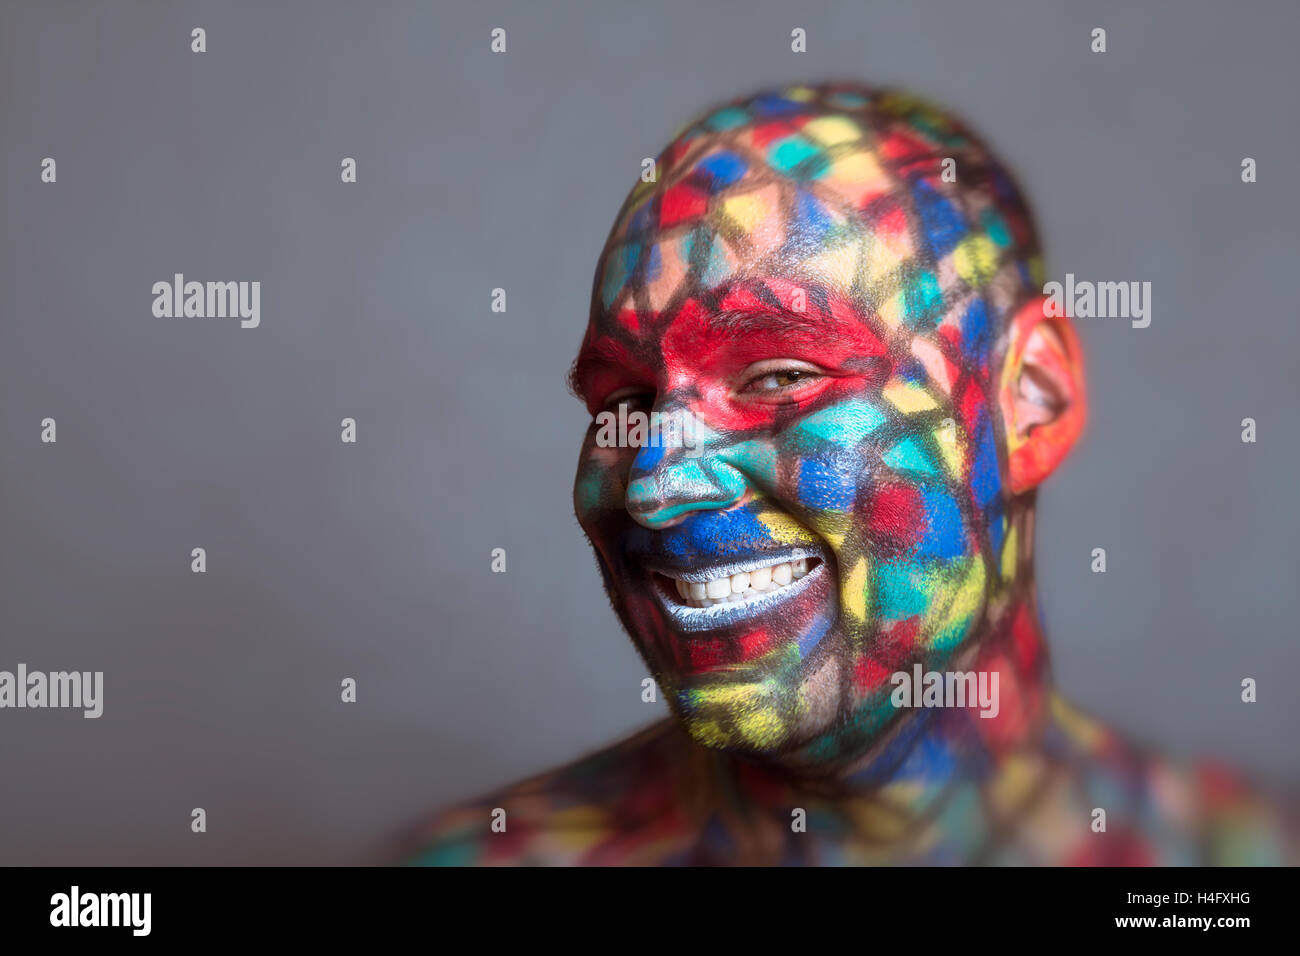 Malicious villain smiling portrait, colorful face art with tilt shift and motion blur effect. Stock Photo